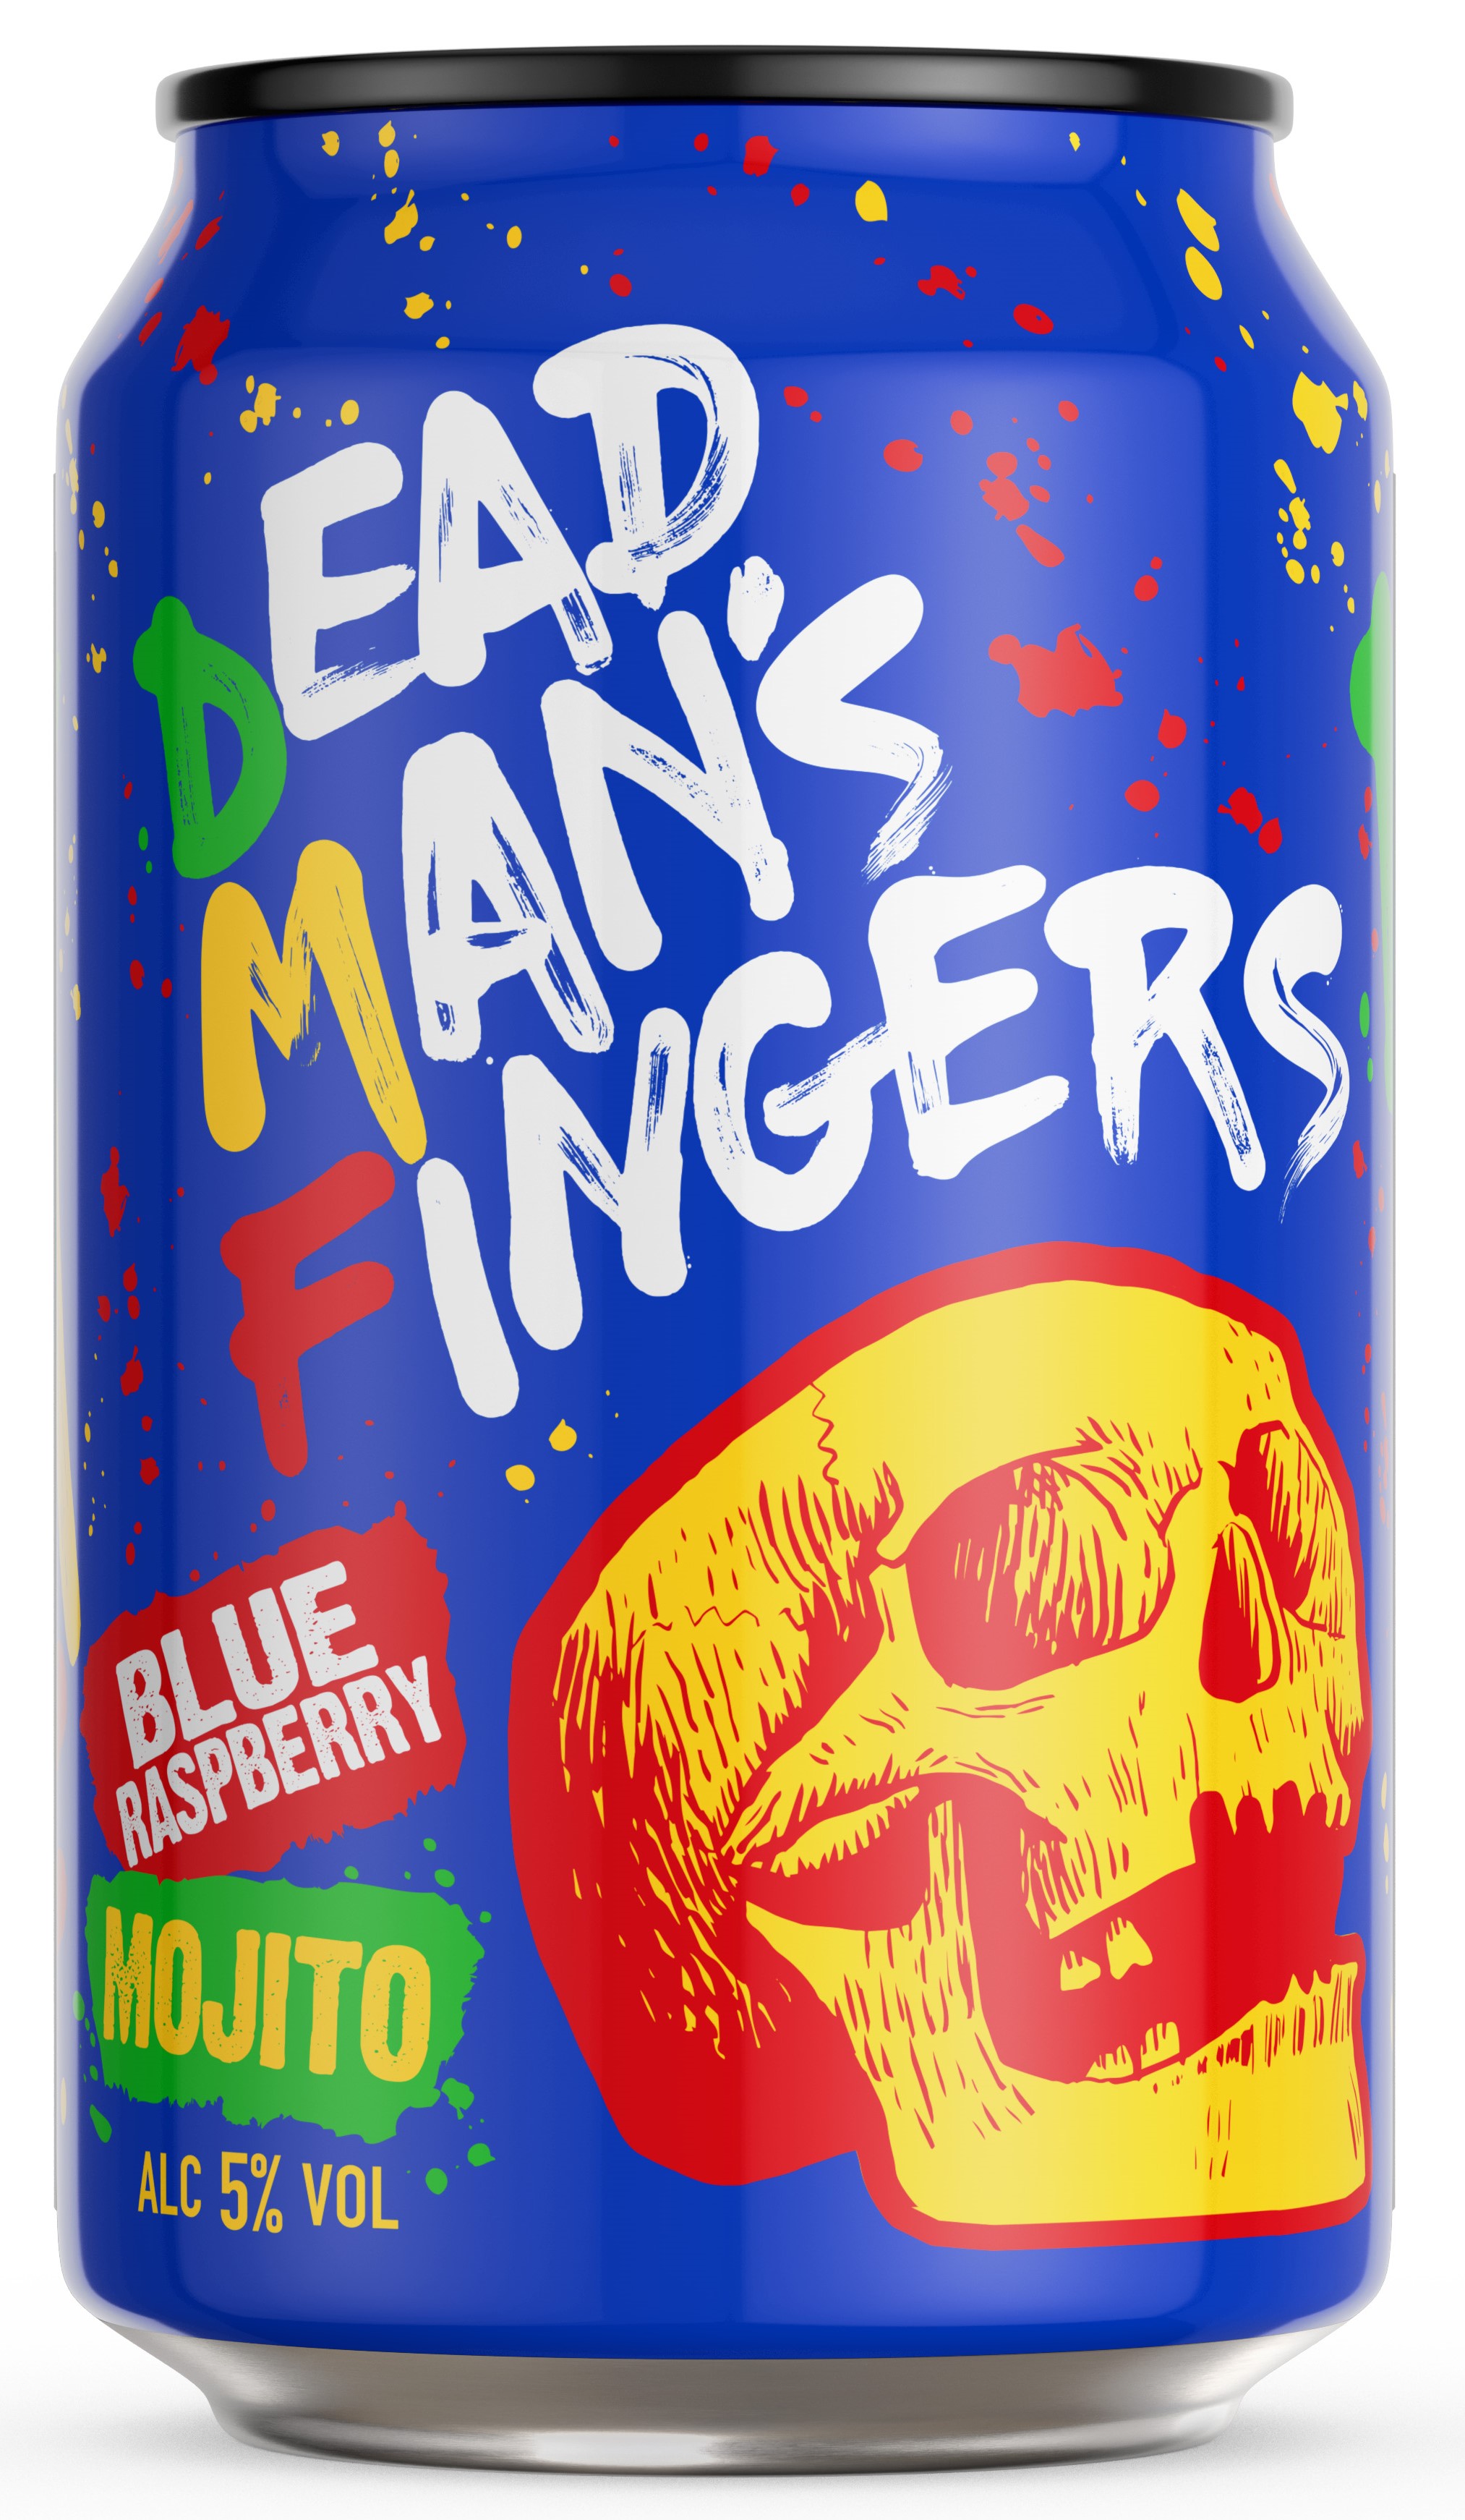 DEAD MAN FINGER BLUE RASPBERRY MOJITO CANS 5% 12 x 330ML